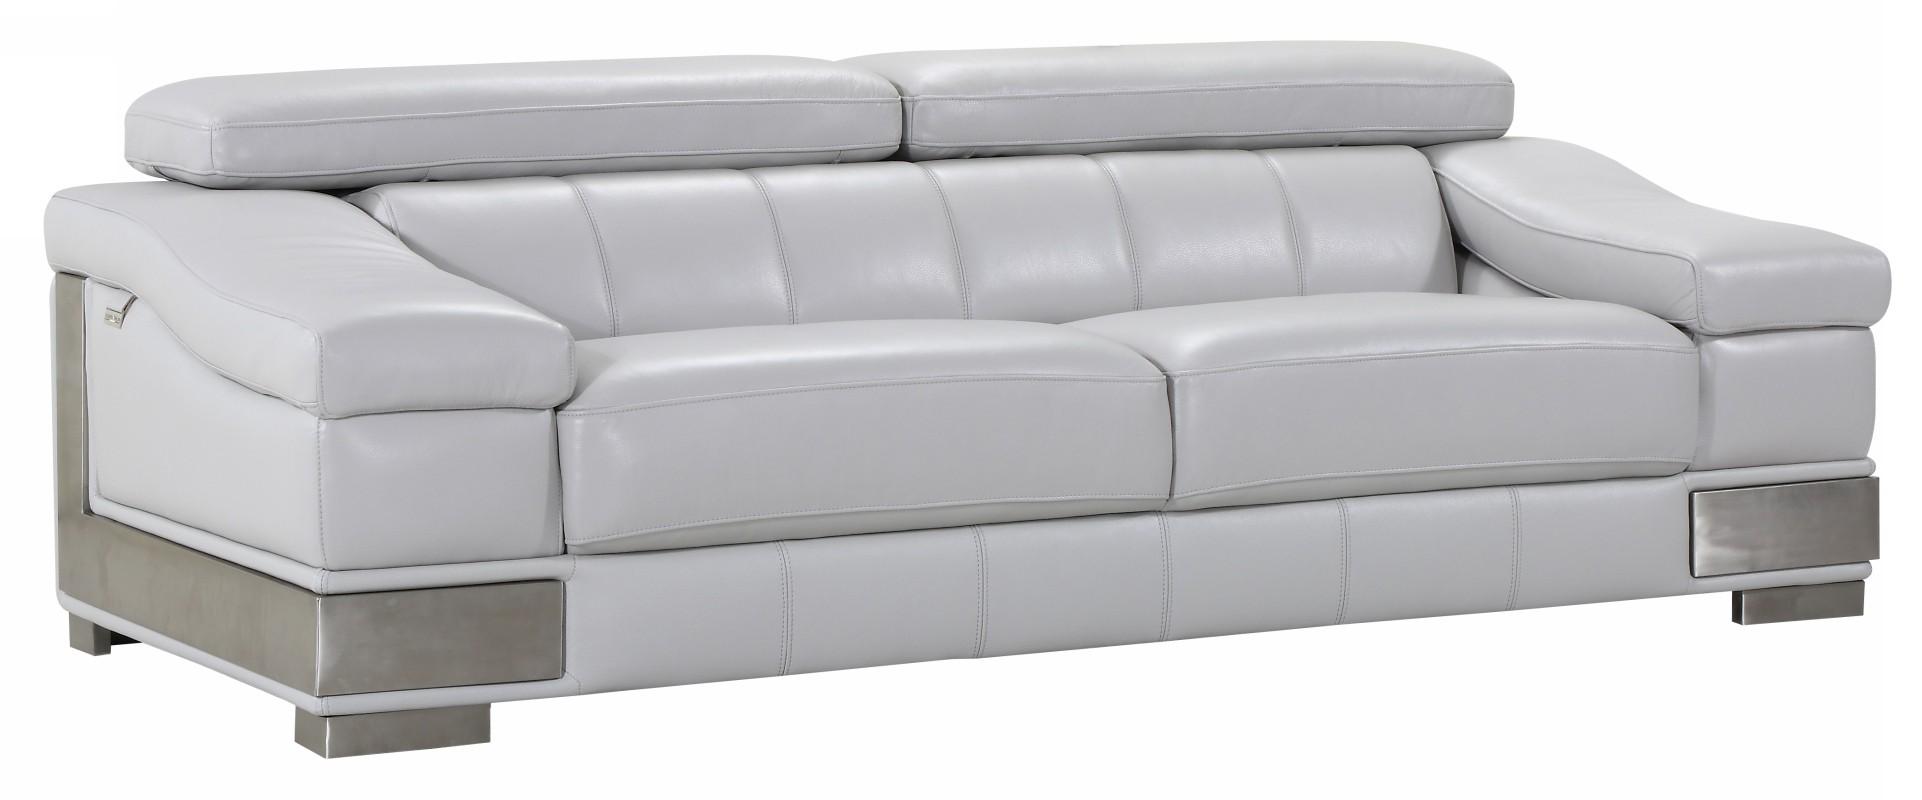 Contemporary Sofa 415 415-LIGHT_GRAY-S in Light Gray Genuine Leather